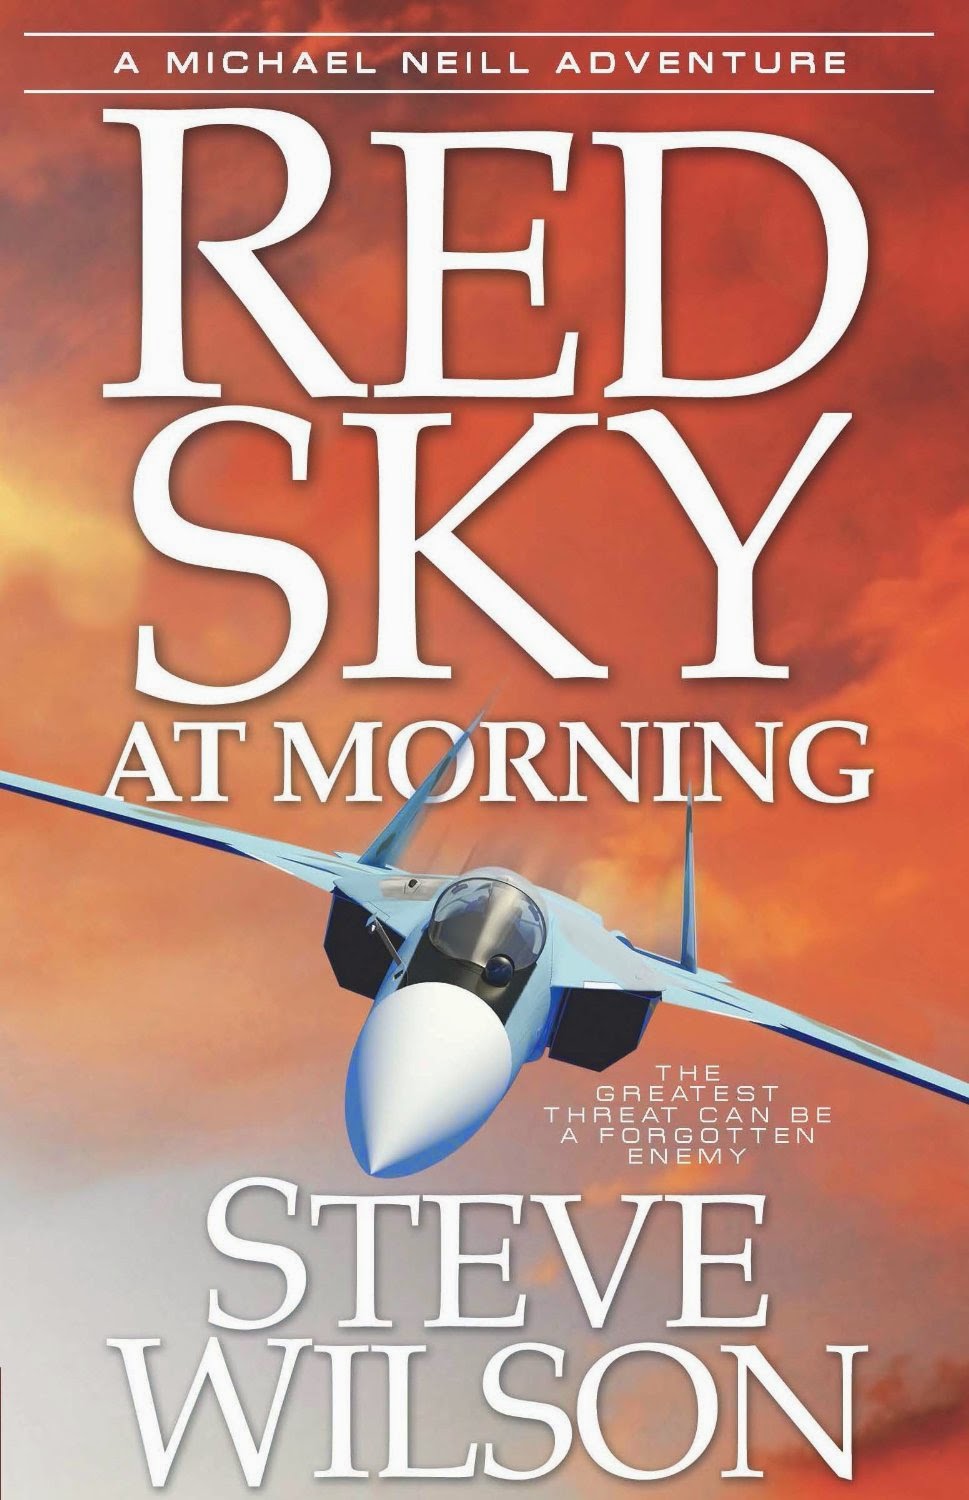 http://www.amazon.com/Morning-Michael-Neill-Adventure-Book-ebook/dp/B0086604YM/ref=sr_1_8?ie=UTF8&qid=1406818040&sr=8-8&keywords=Red+Sky+At+Morning